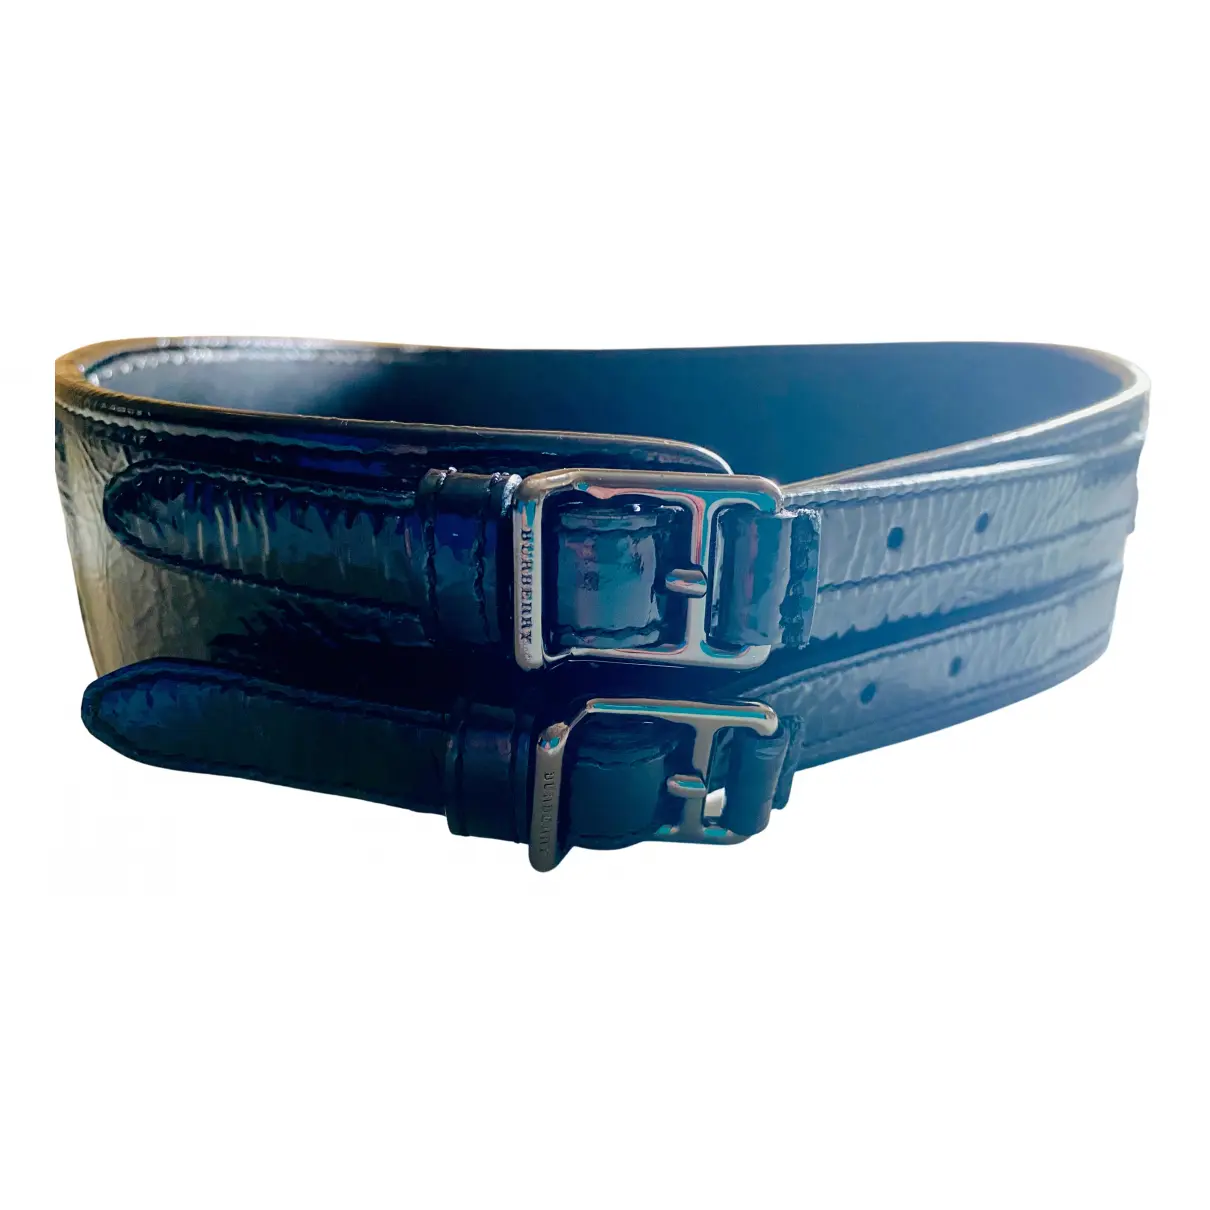 Patent leather belt Burberry